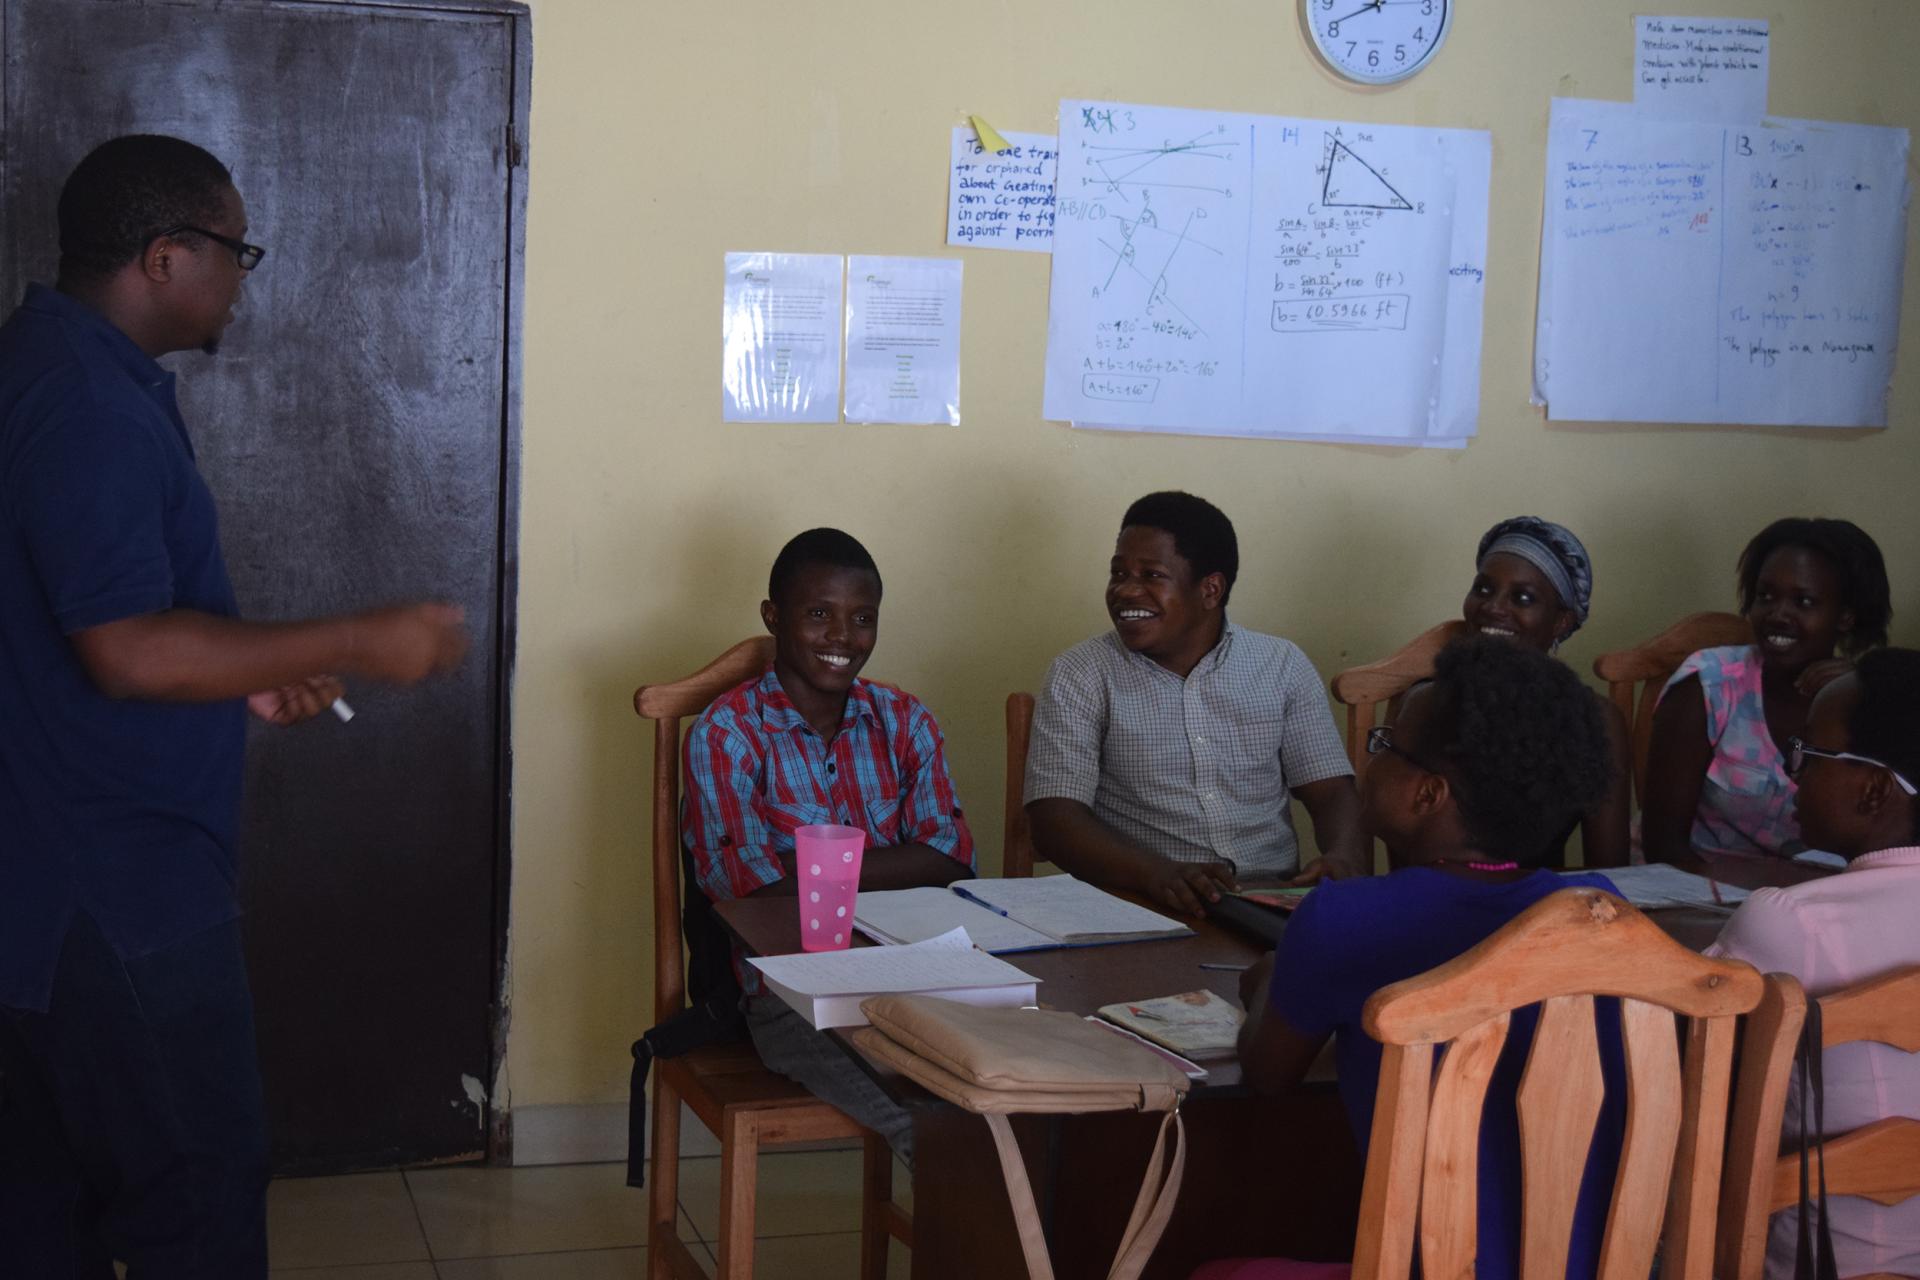 Gates Cambridge Scholar Etienne Mashuli teaching his students in the Tujenge Scholars Programme.